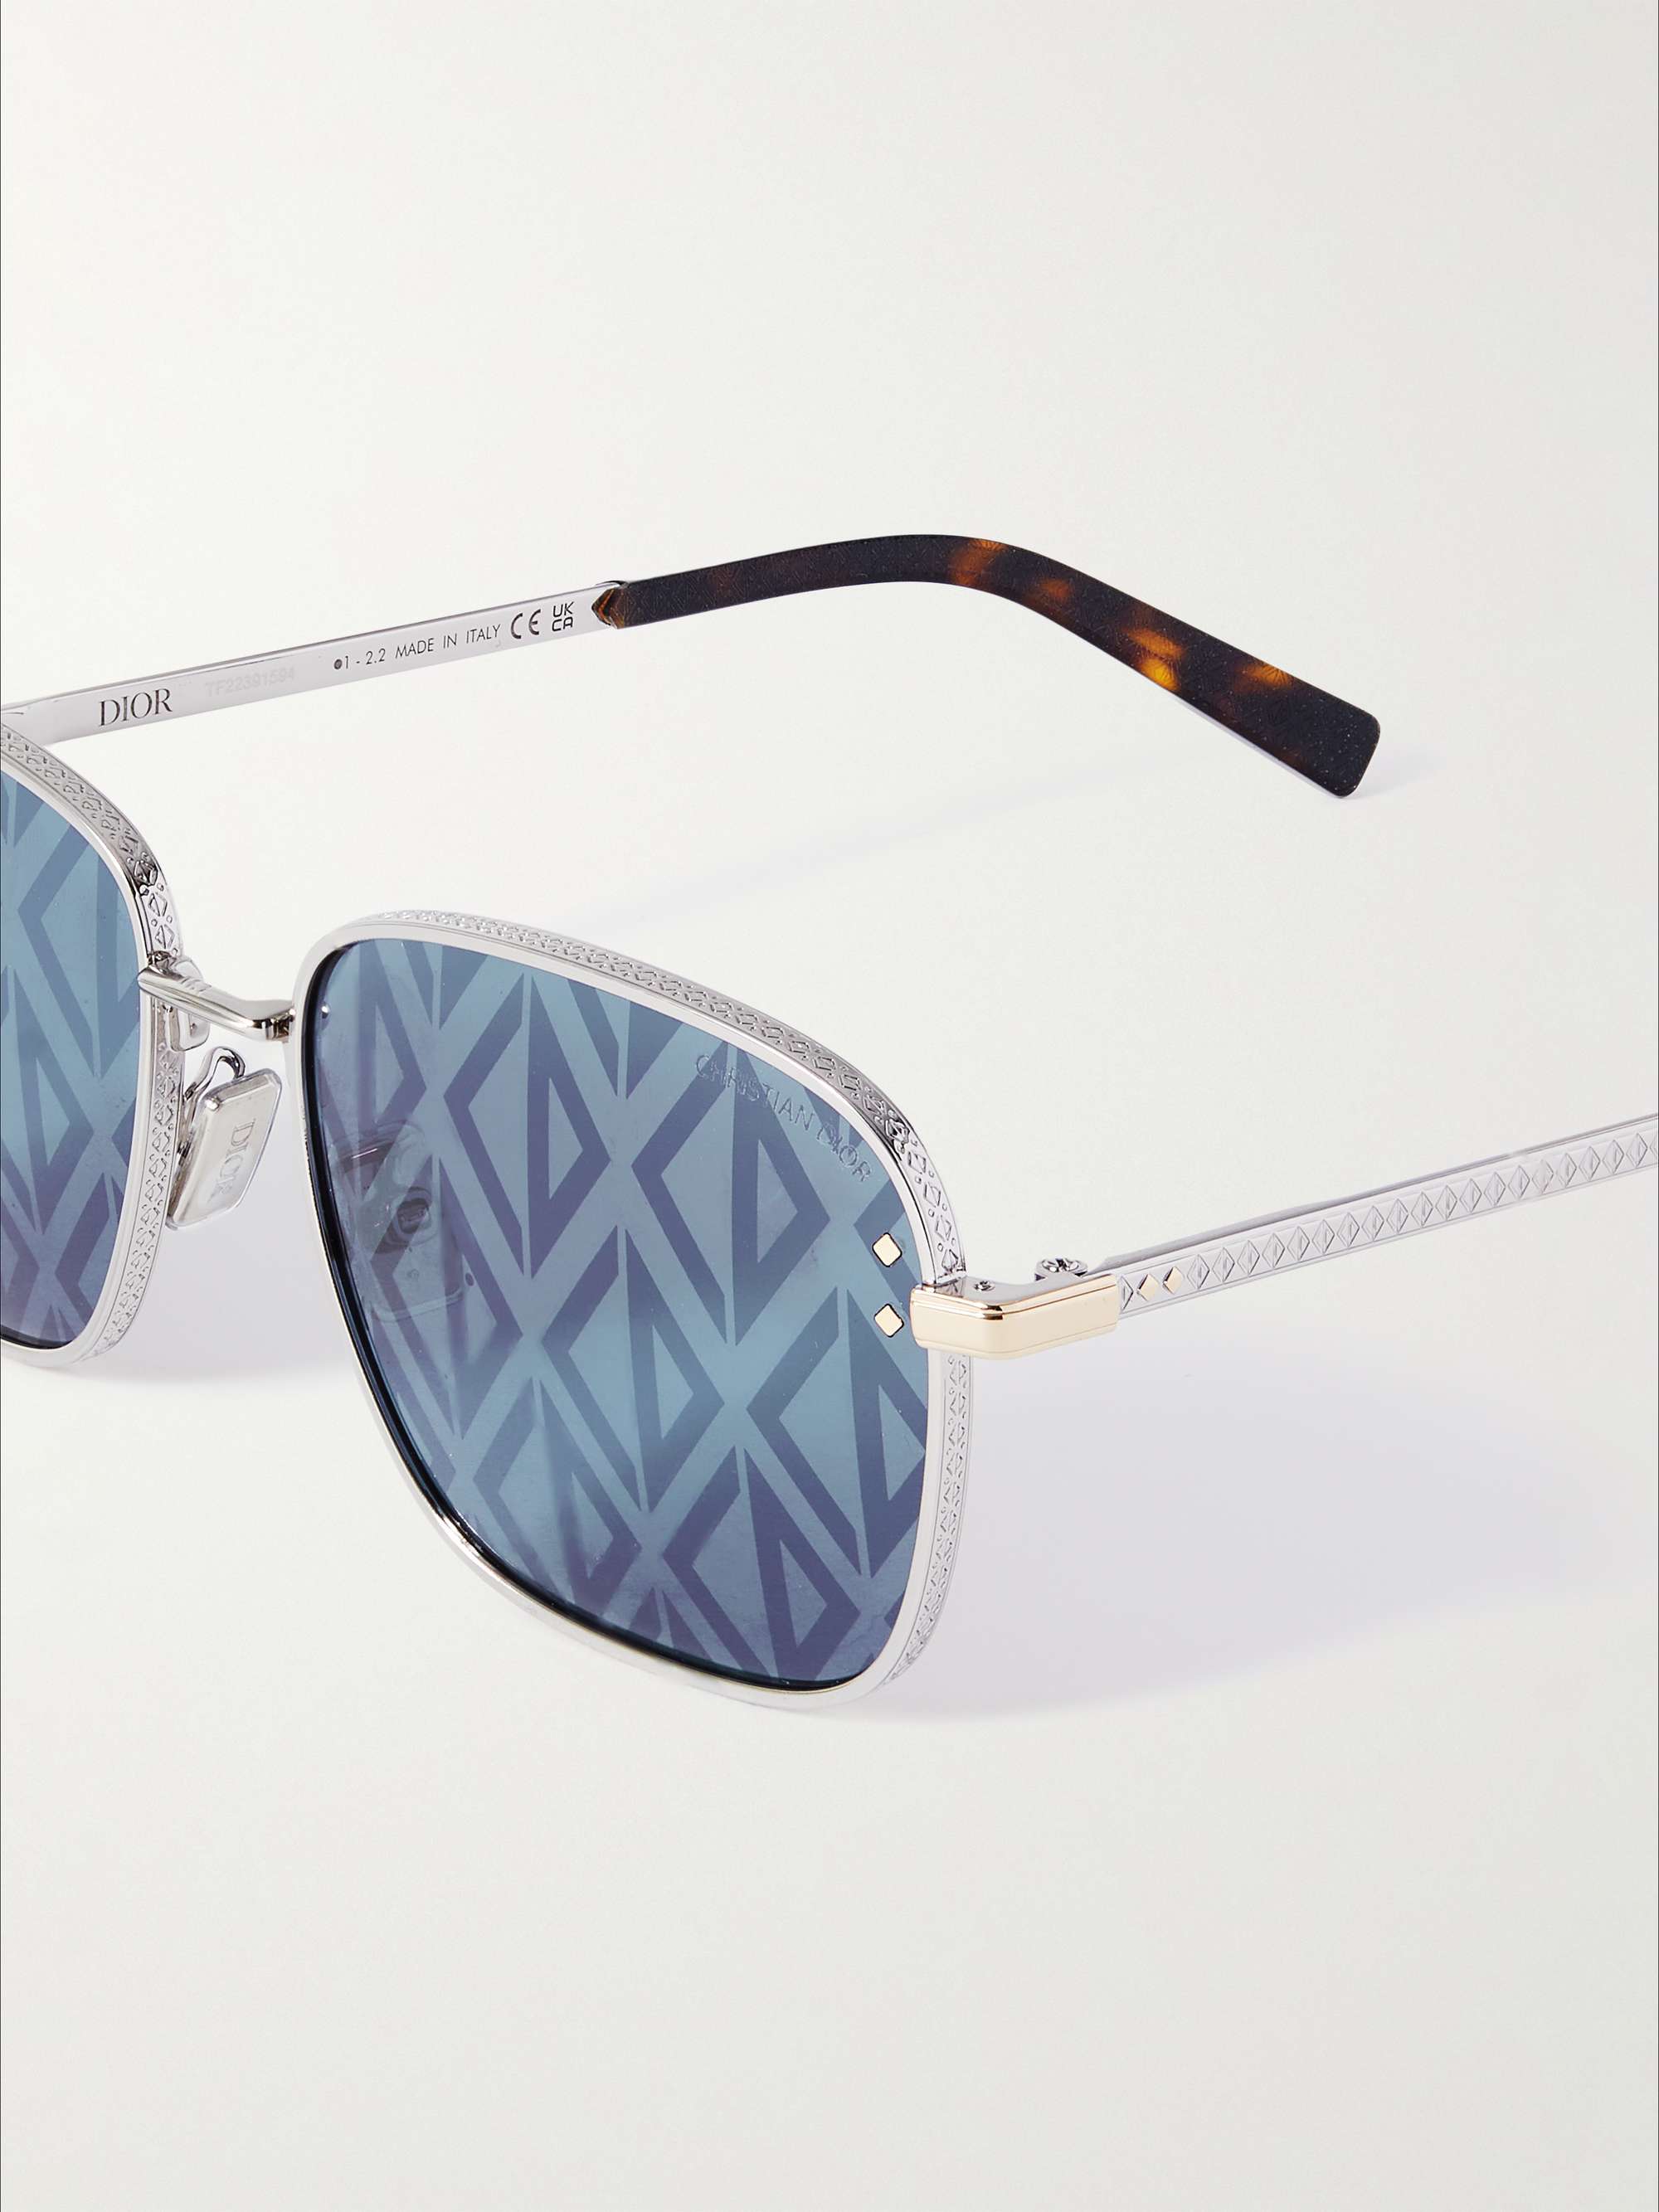 DIOR EYEWEAR CD Diamond S4U D-Frame Silver-Tone and Tortoiseshell Acetate Sunglasses